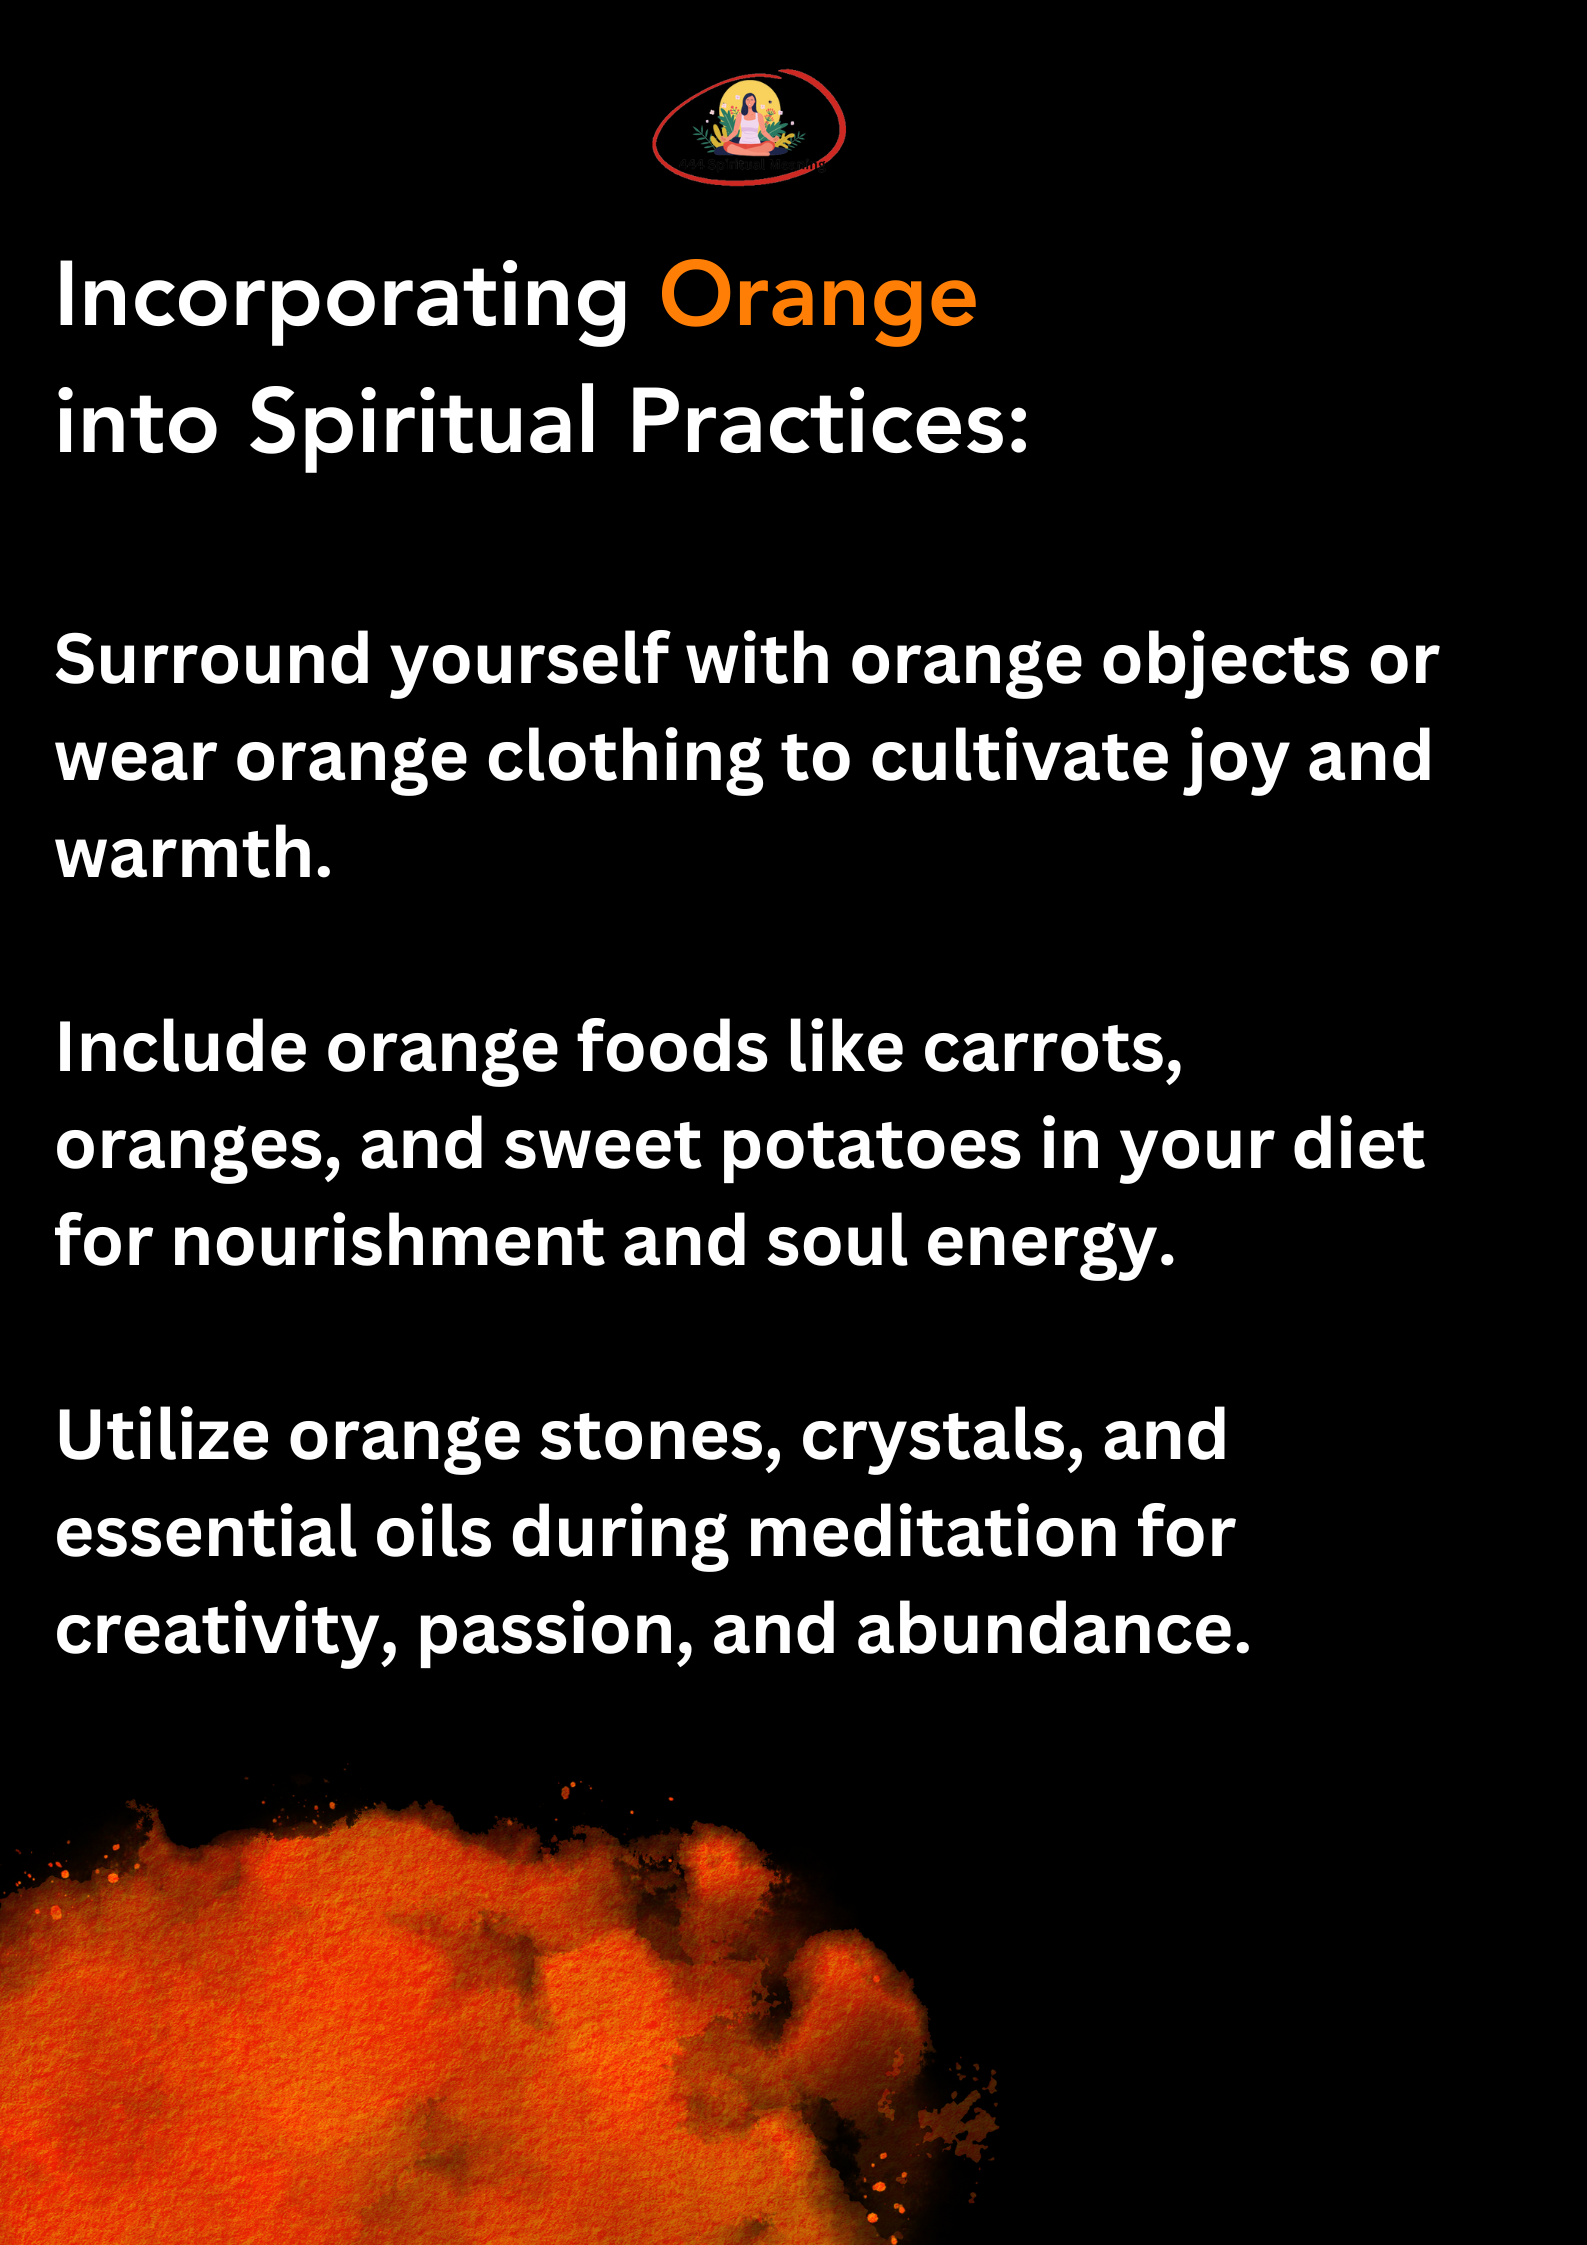 Incorporating Orange into Spiritual Practices